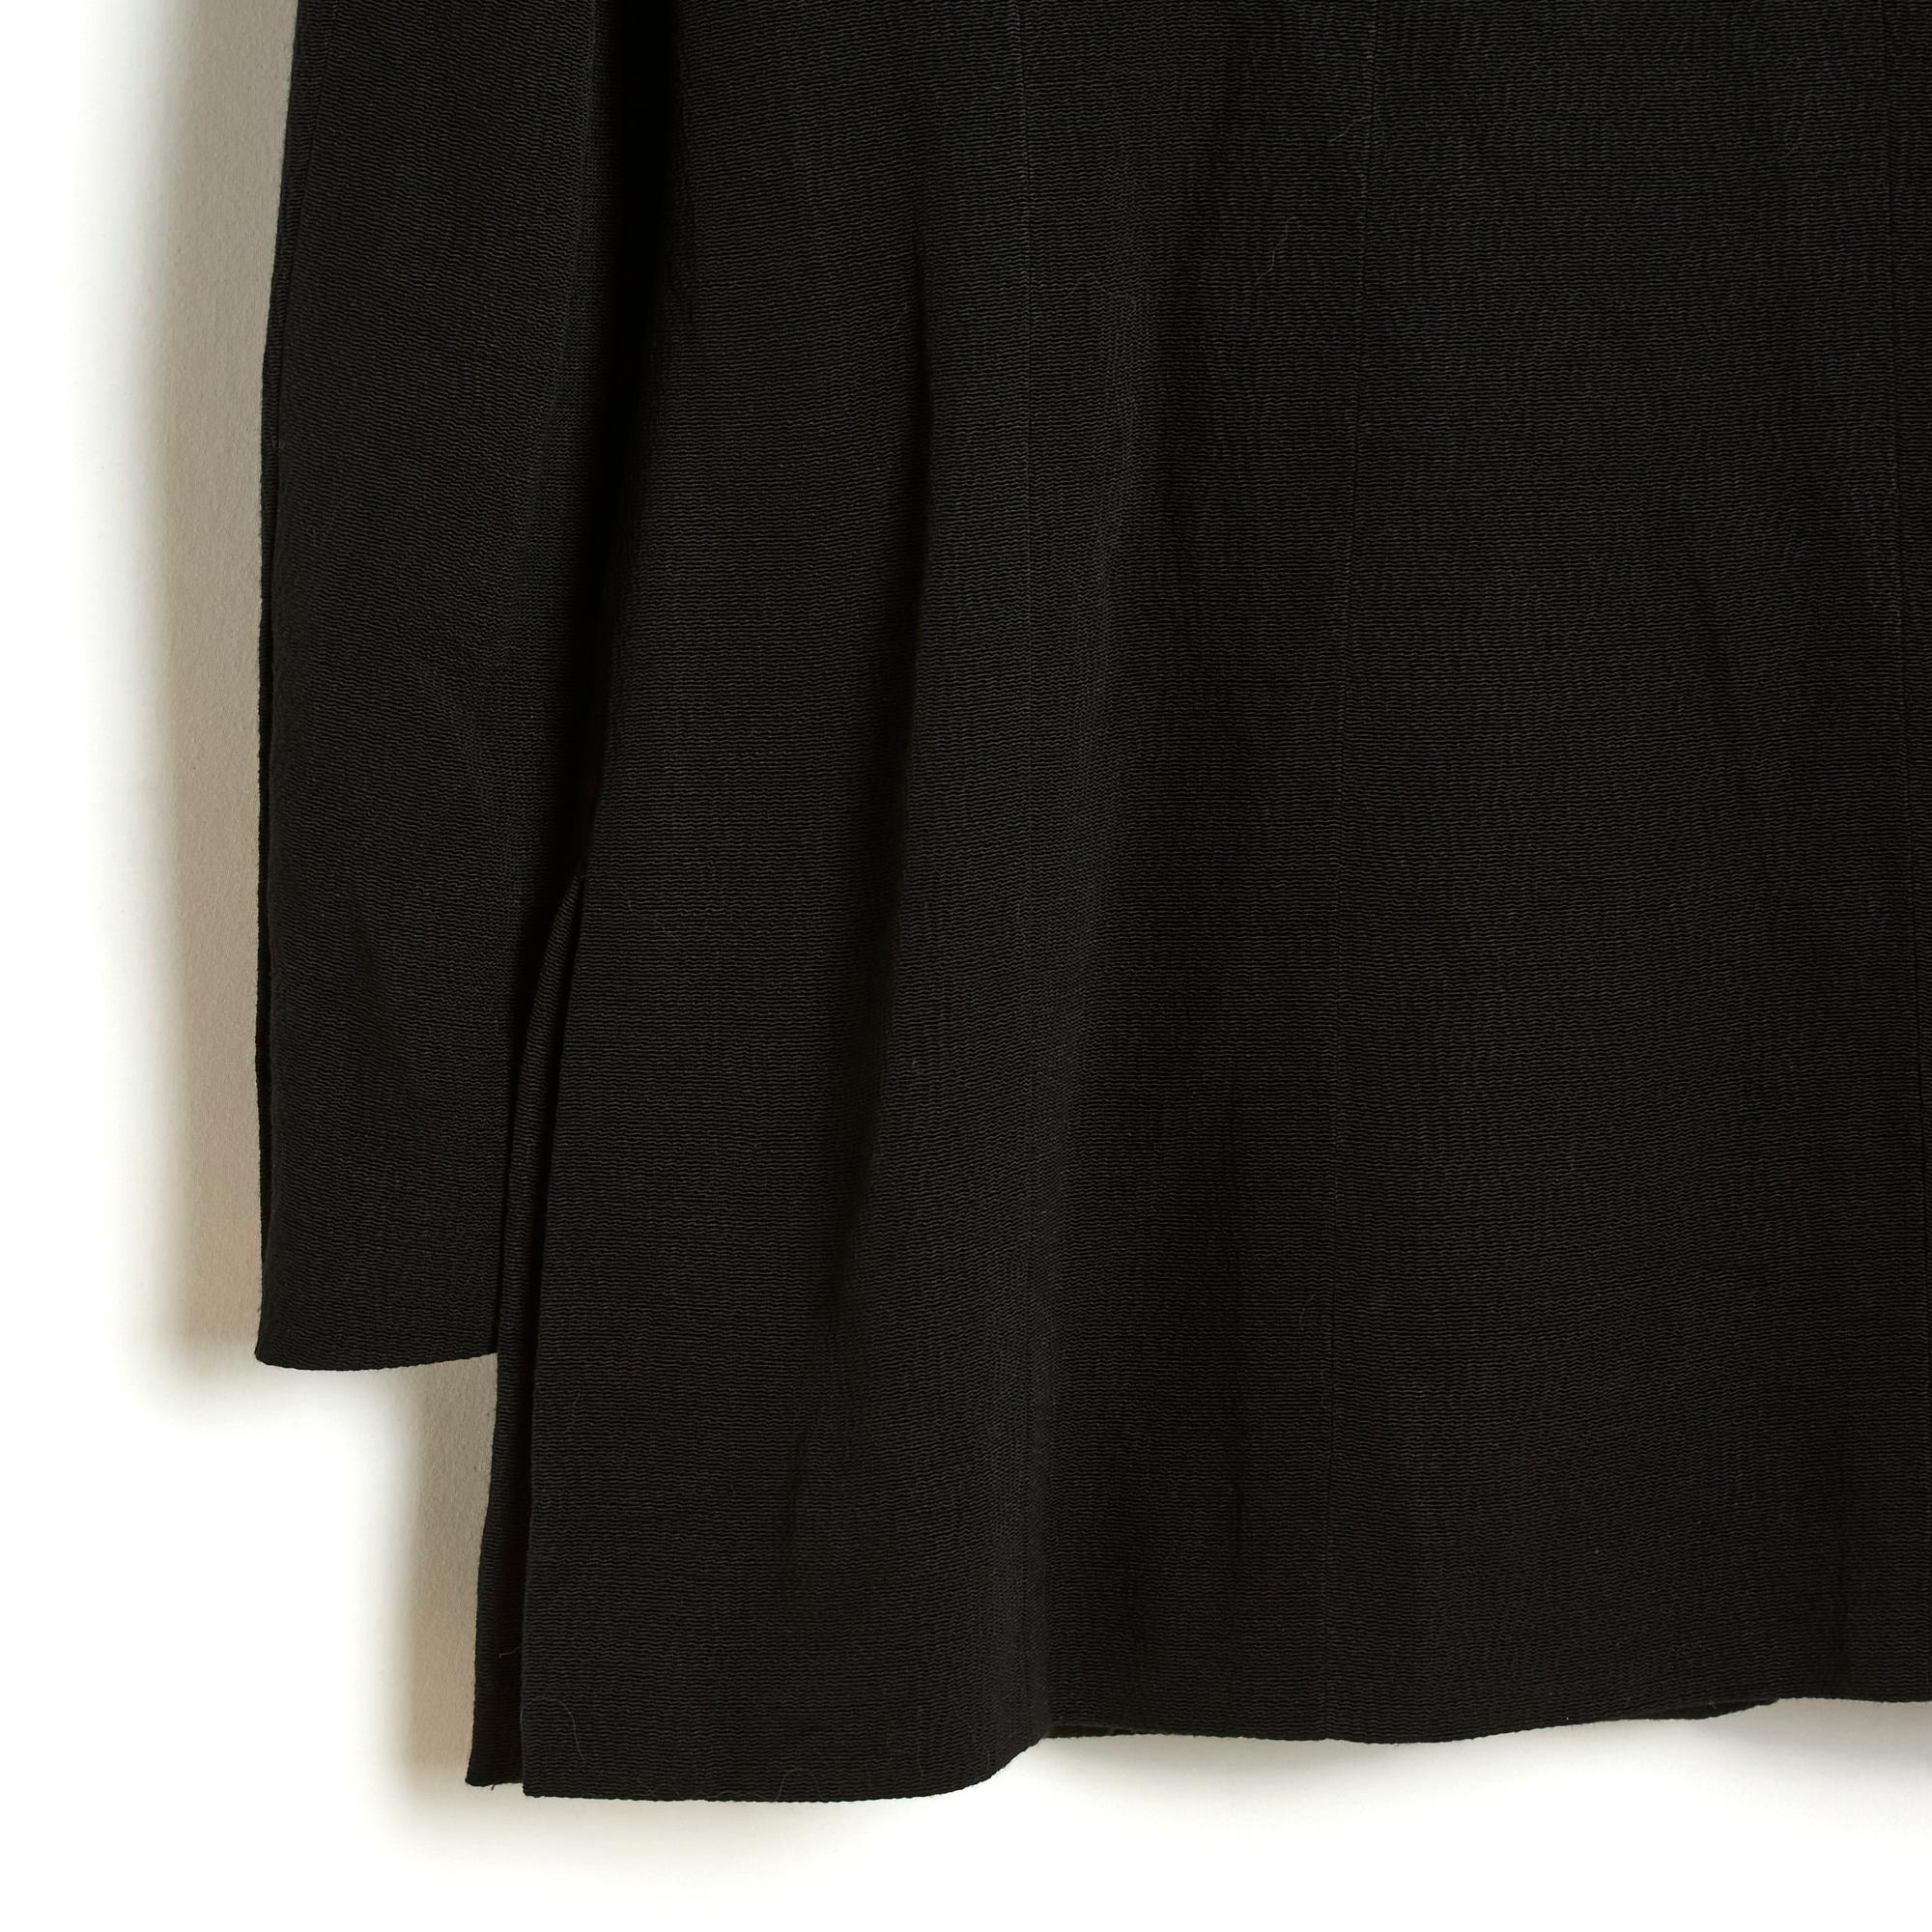 SS 1993 Chanel black crepe blazer FR42 1